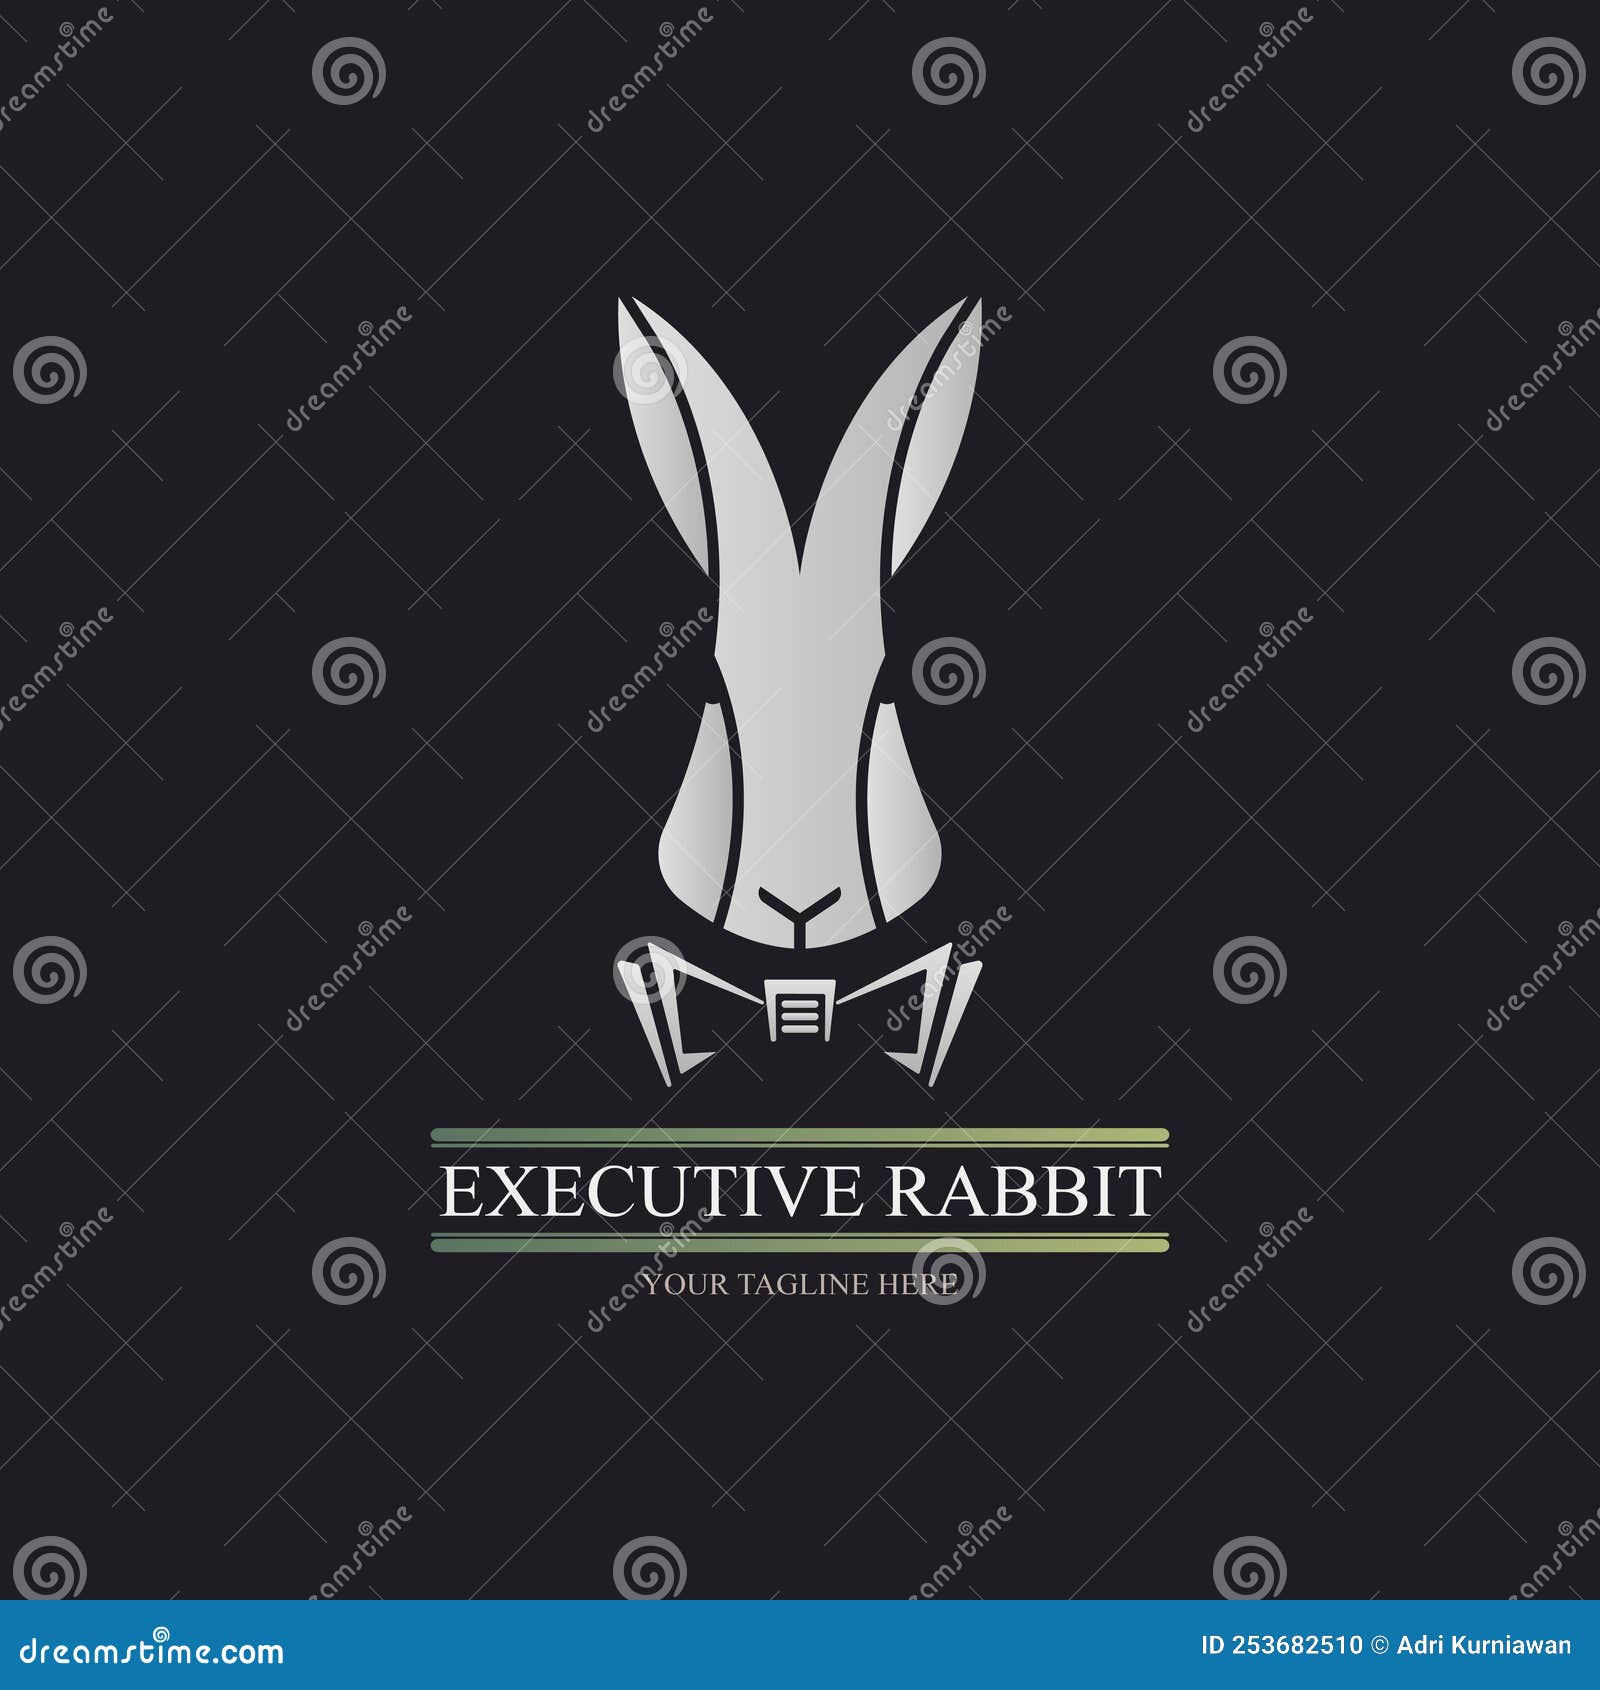 Creative Rabbit Logo Design - Logo #354363 - TemplateMonster